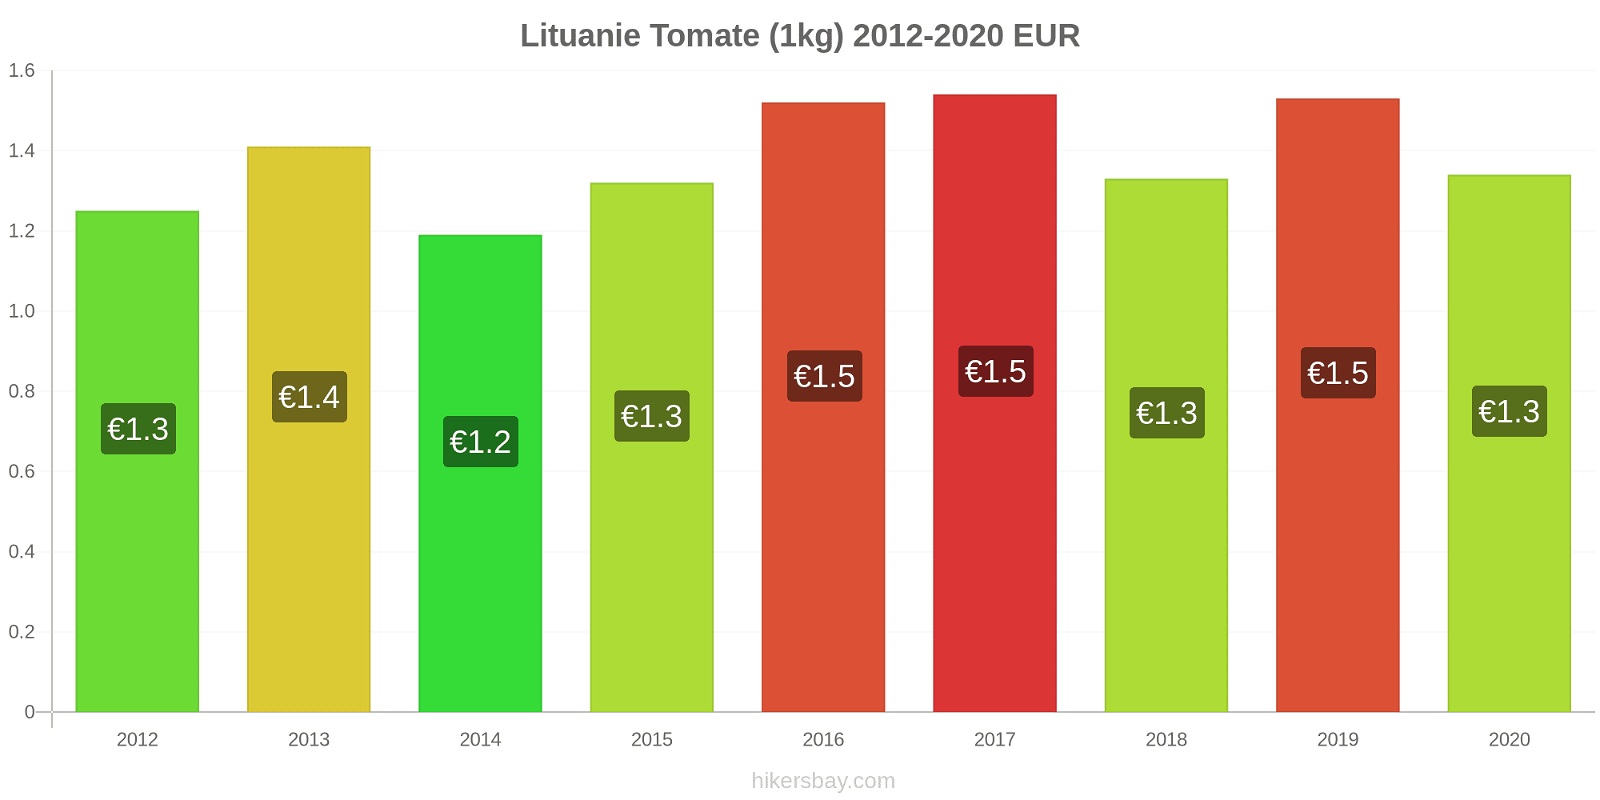 Lituanie changements de prix Tomate (1kg) hikersbay.com